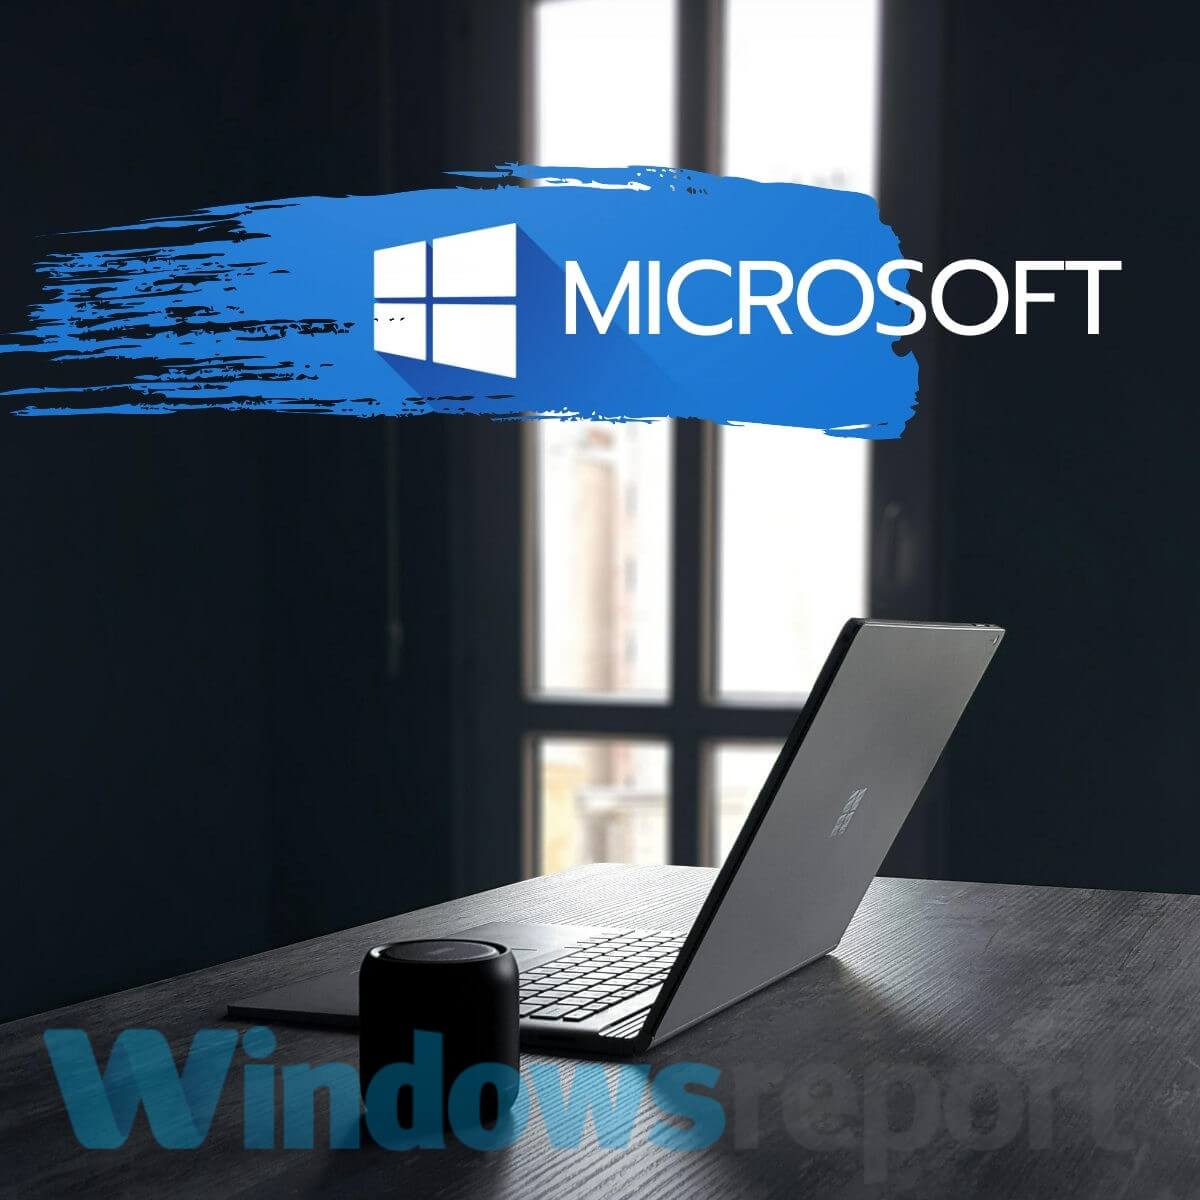 What is Windows WinSxS